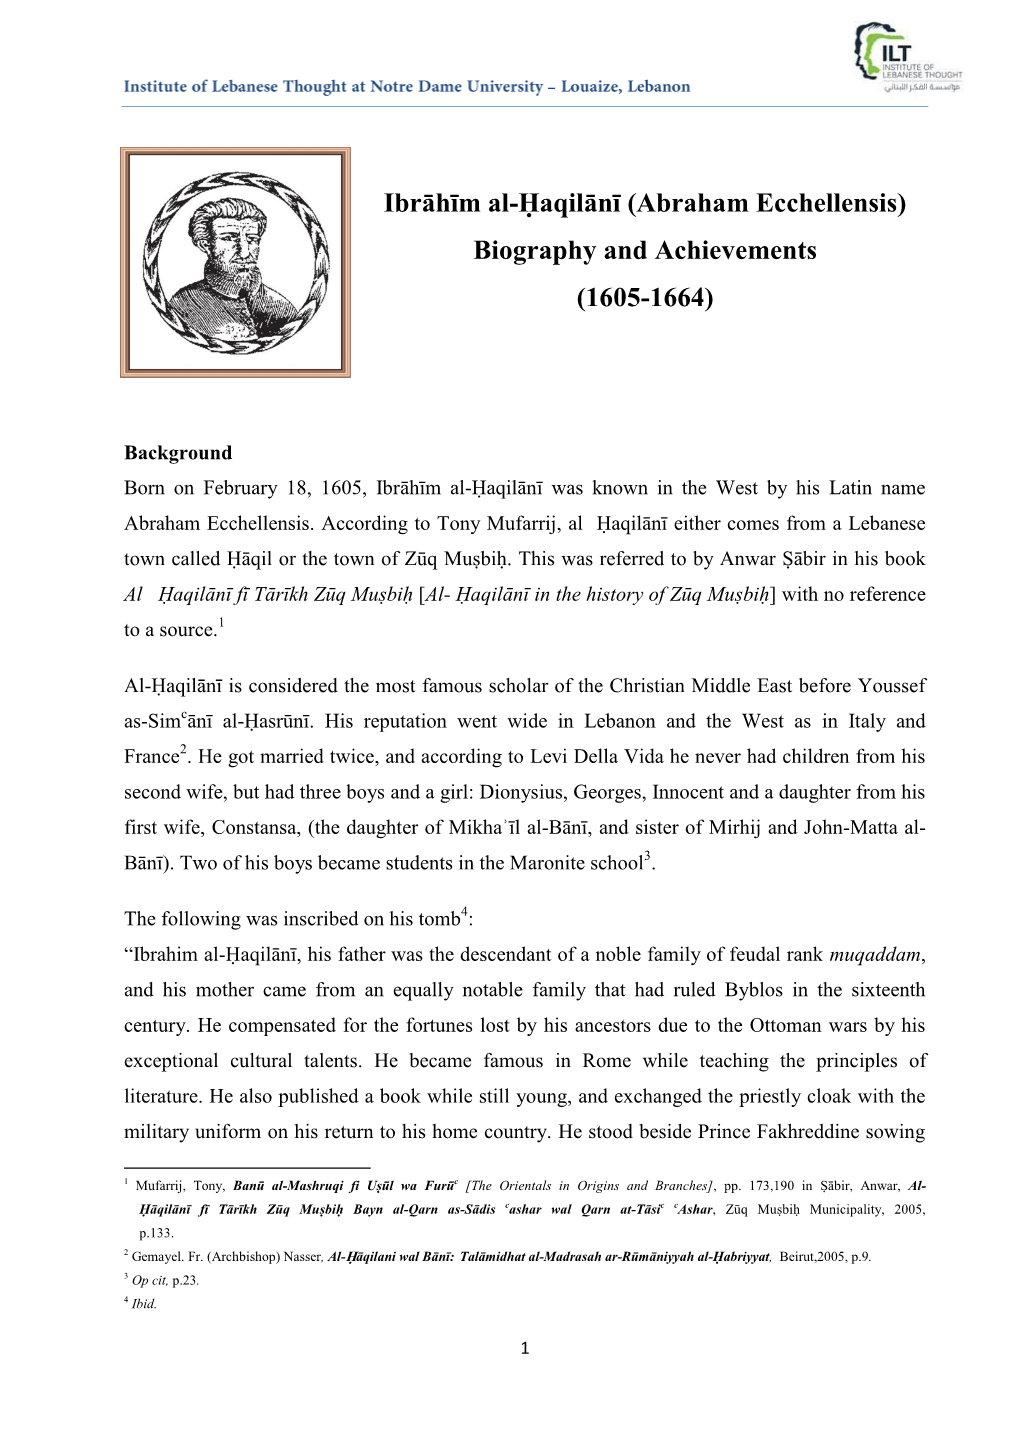 Ibrāhīm Al-Ḥaqilānī (Abraham Ecchellensis) Biography and Achievements (1605-1664)